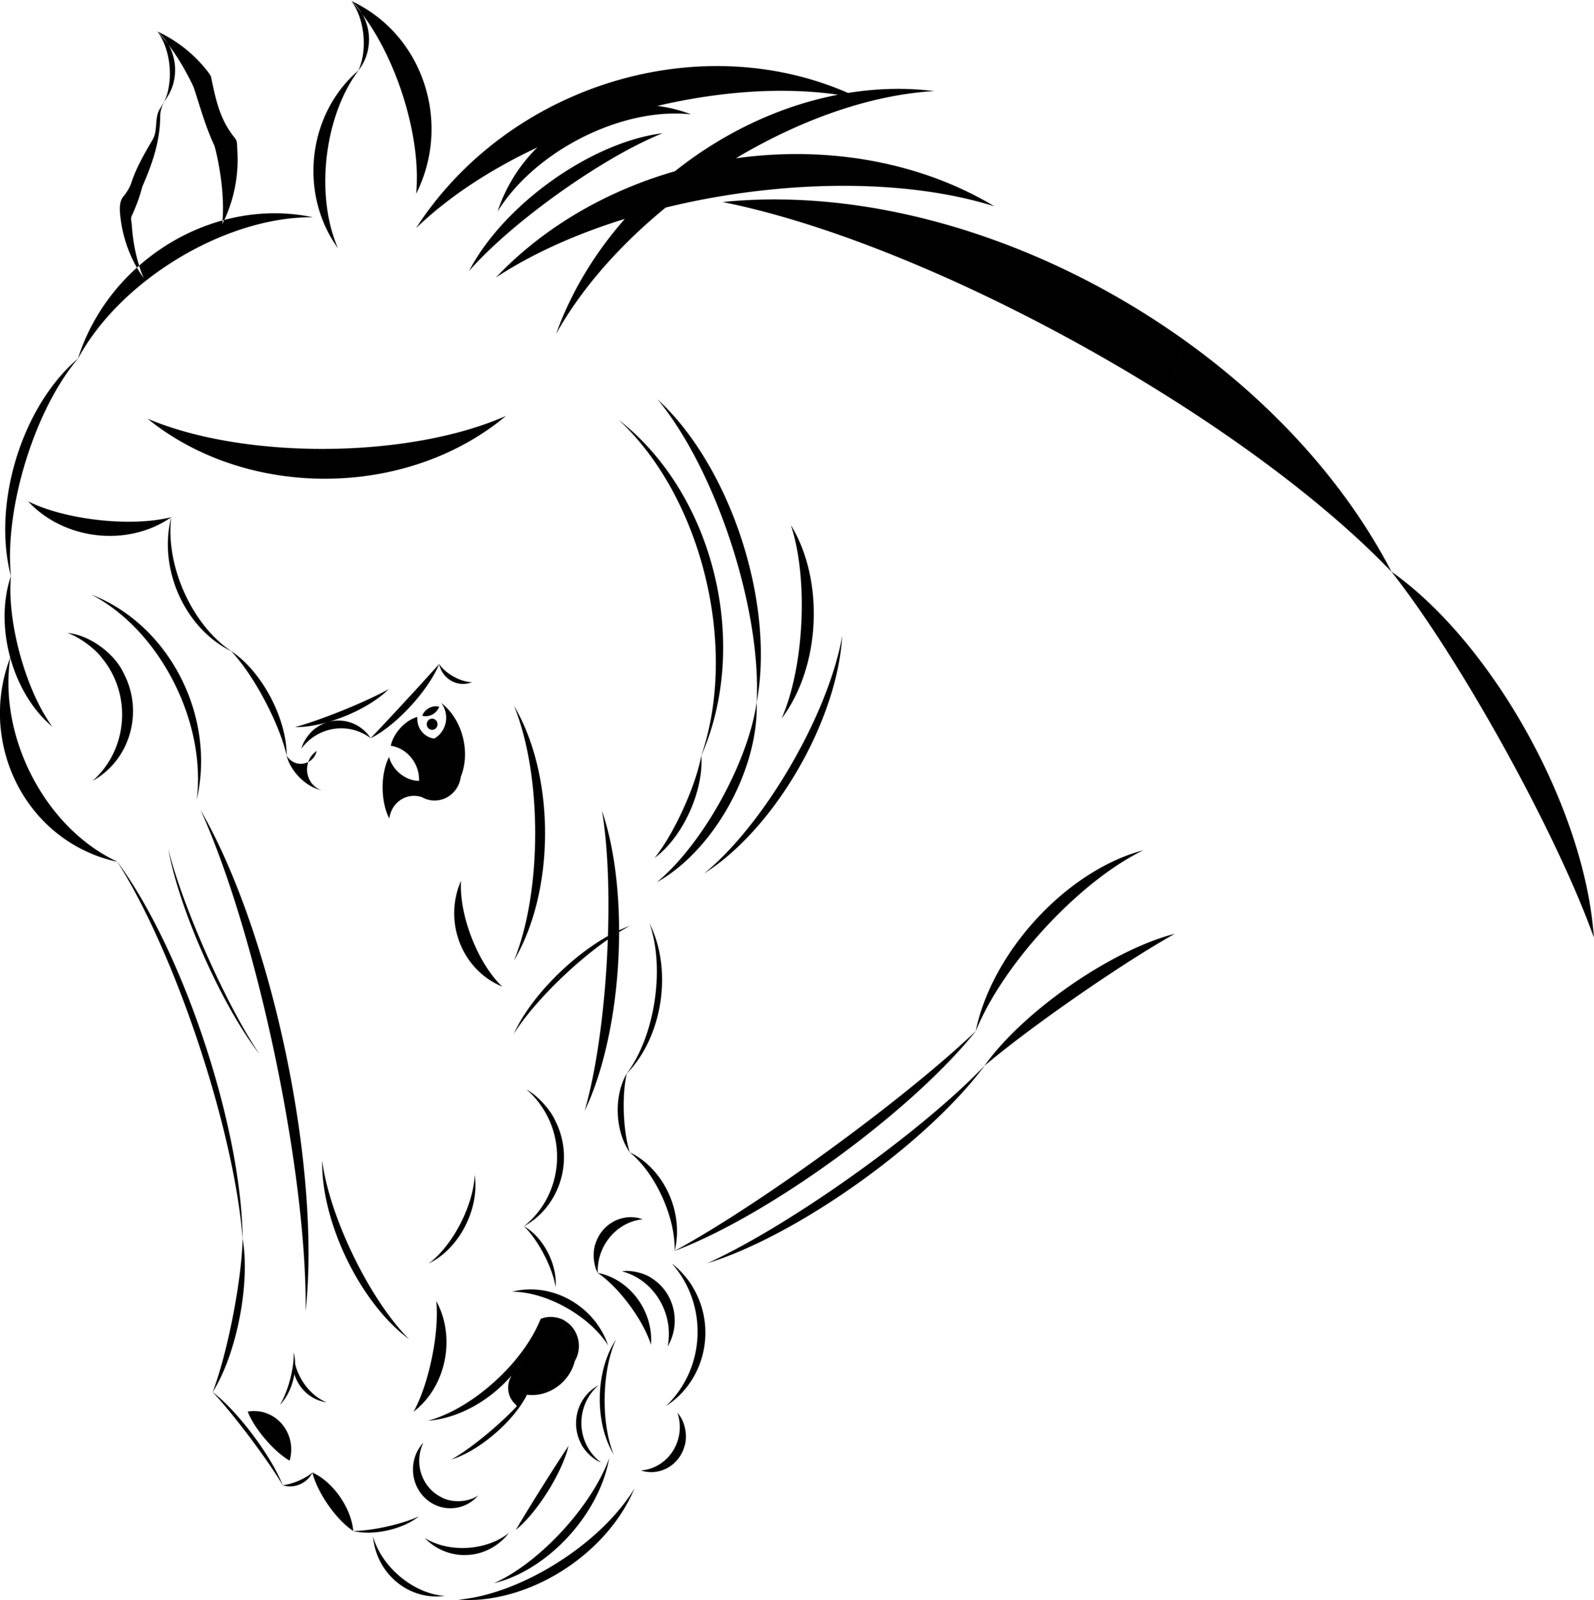 Vector illustration tattoo style sketch  horse head.